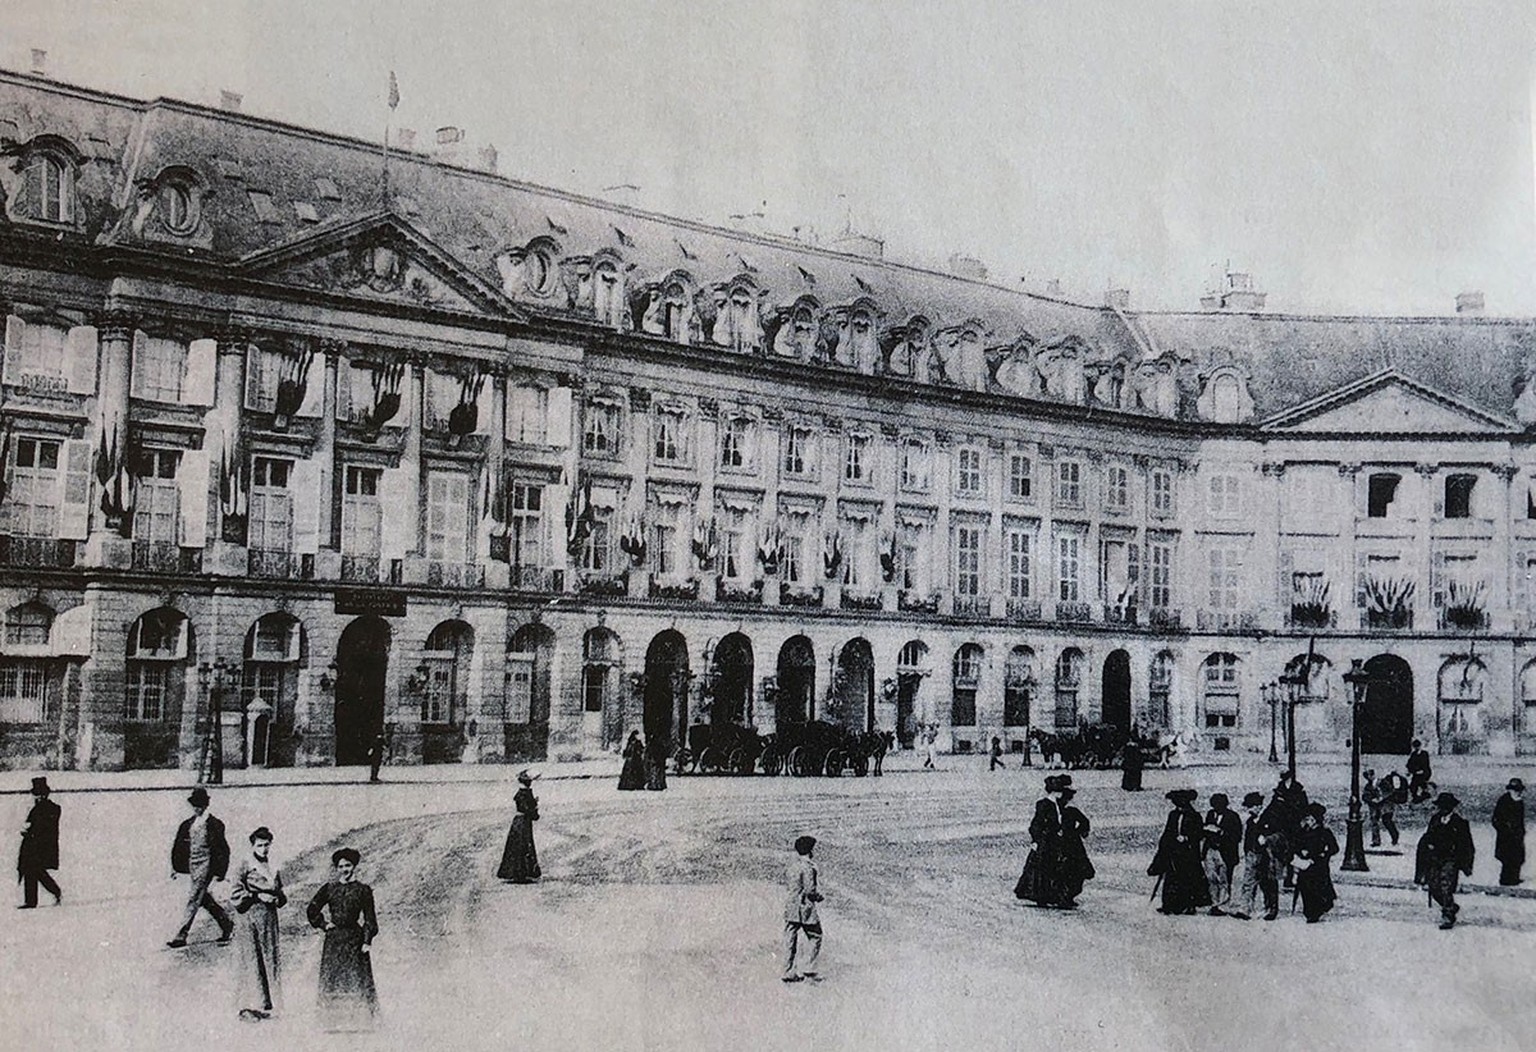 L’hôtel Ritz à Paris, vers 1900.
https://commons.wikimedia.org/wiki/File:Hotel_Ritz_Paris_1900.jpg